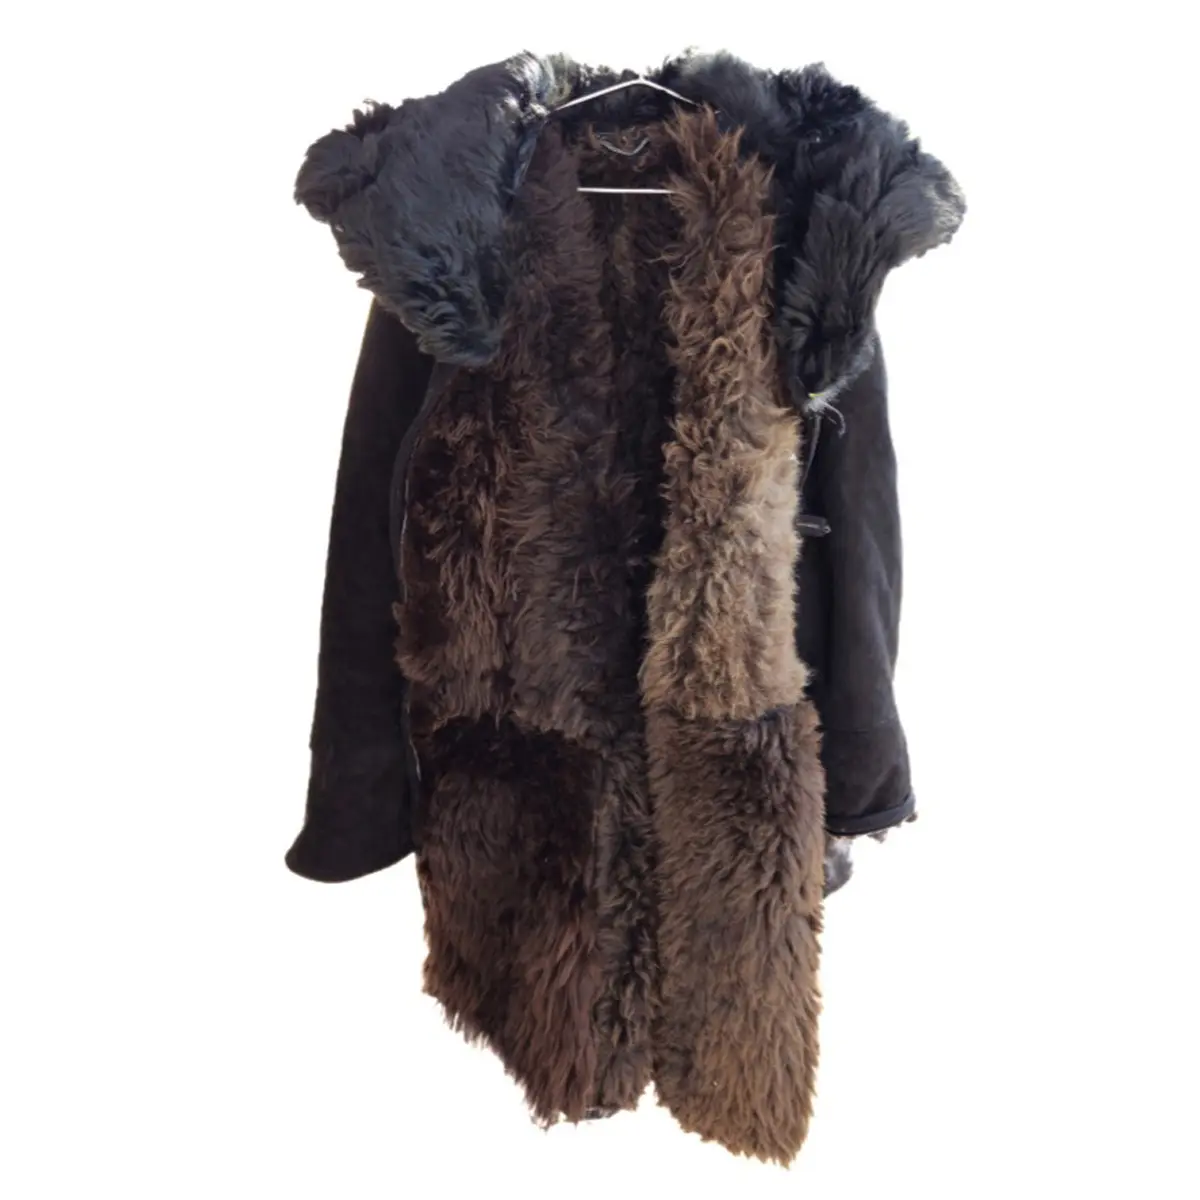 Inverno carneiro casaco "tulup" preços fabricante inverno casacos para venda